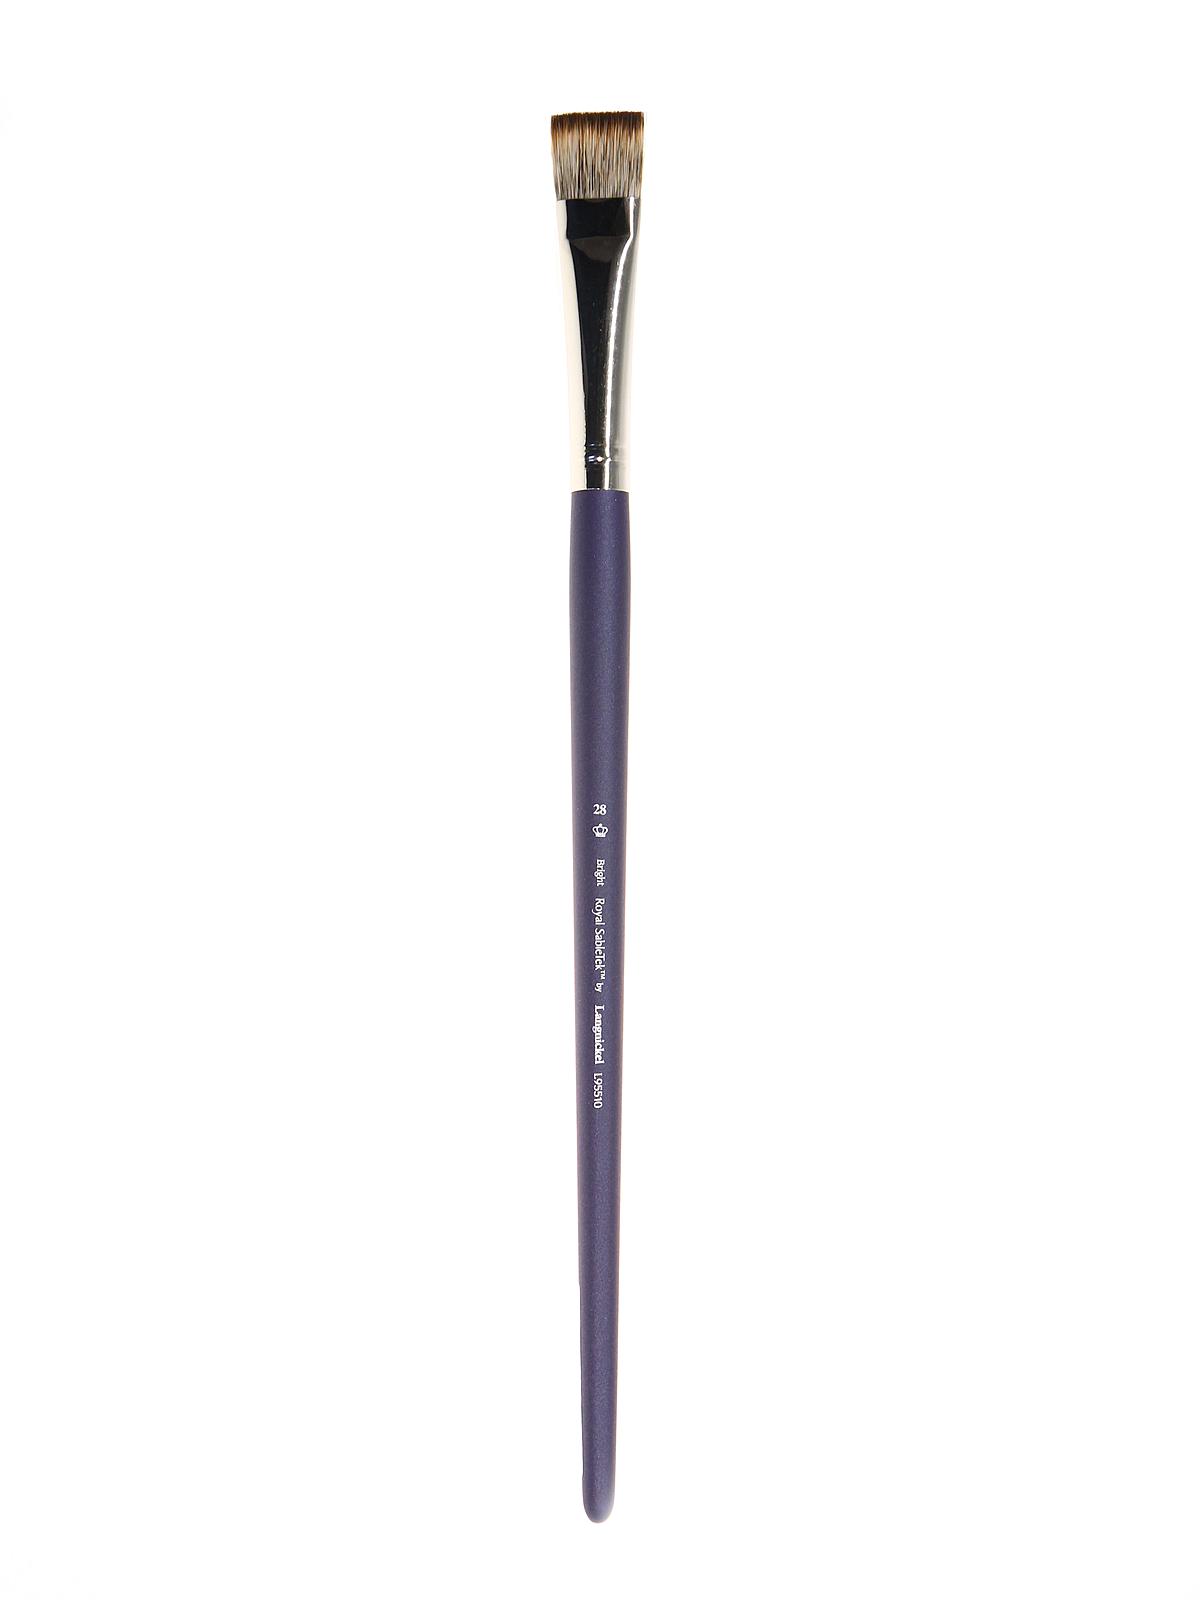 Sabletek Brushes Long Handle 28 Bright L95510